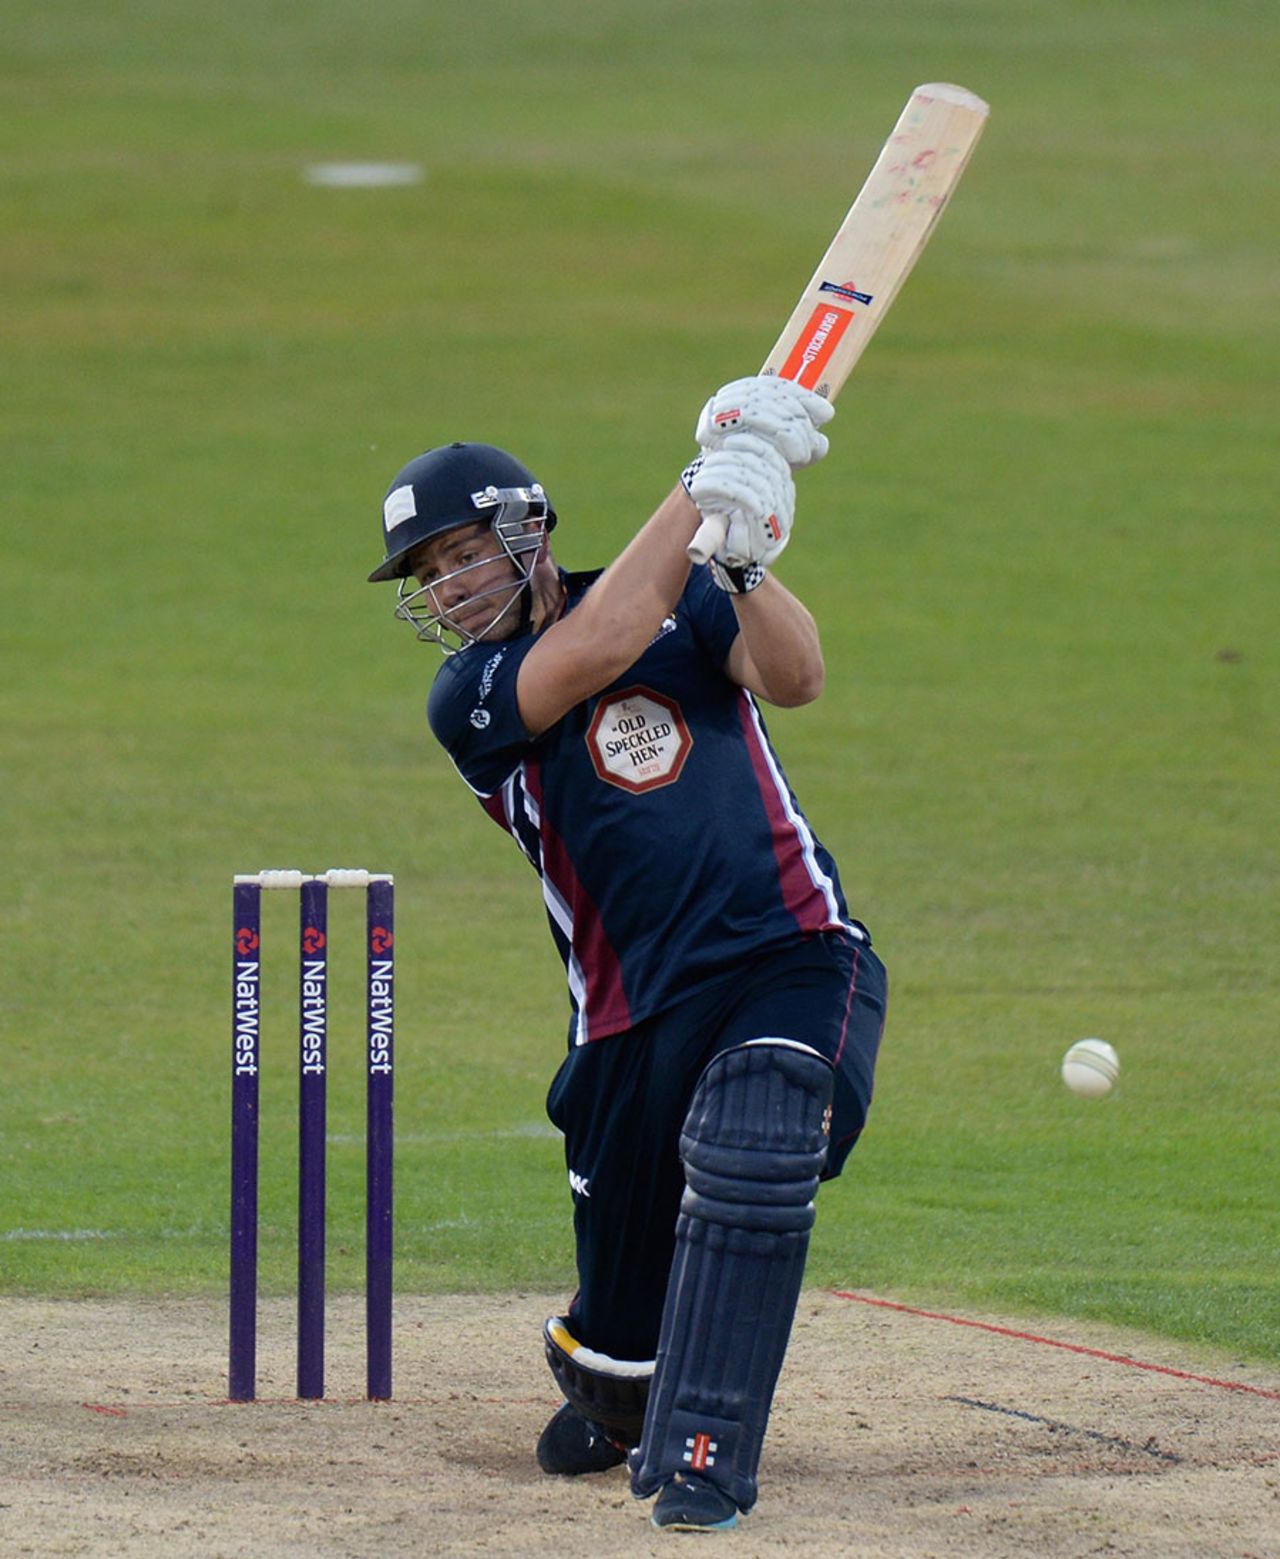 Adam Rossington made 34 in 17 balls, Northamptonshire v Derbyshire, NatWest T20 Blast, Wantage Road, July 11, 2014